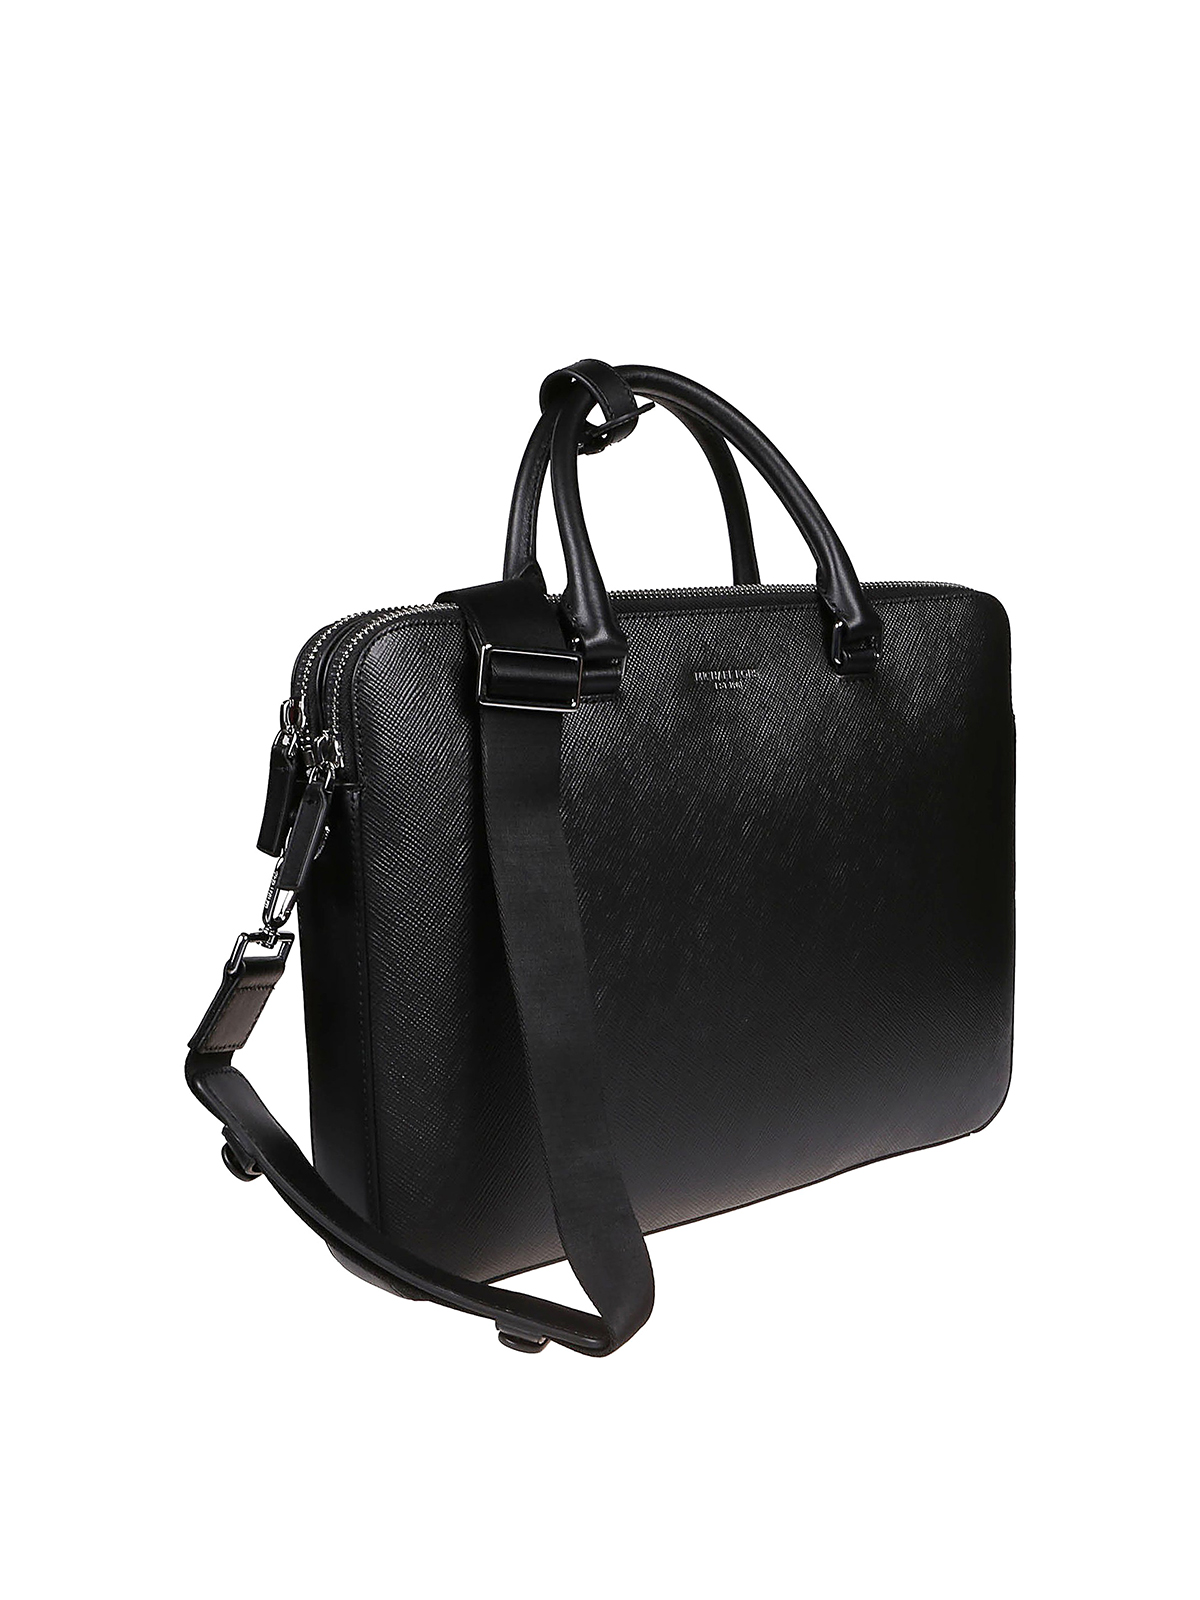 Michael Kors Handbag Tote Laptop Black Saffiano Leather